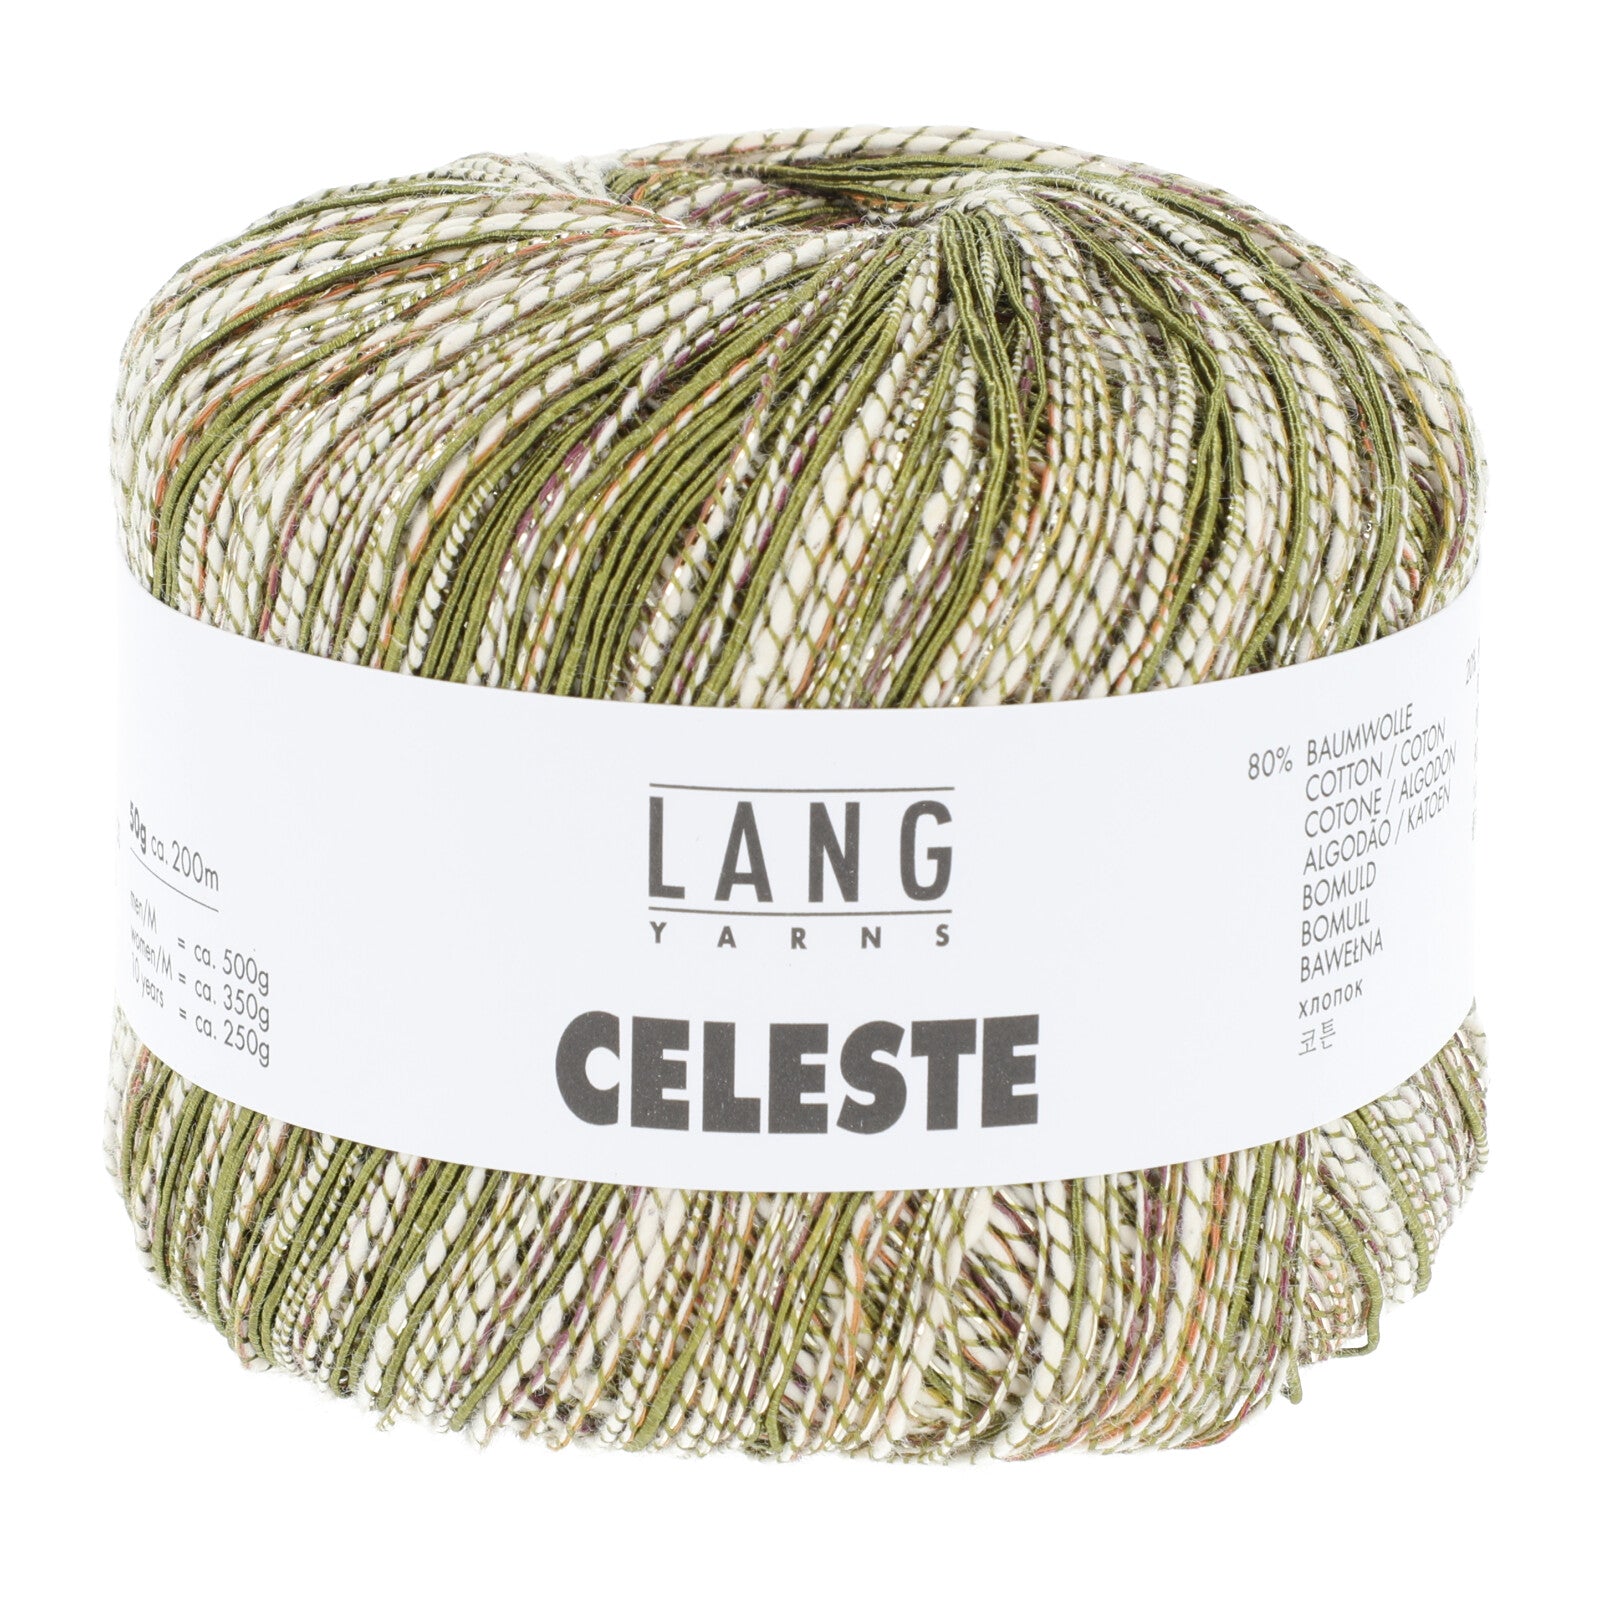 Lang Yarns Celeste yarn color 97